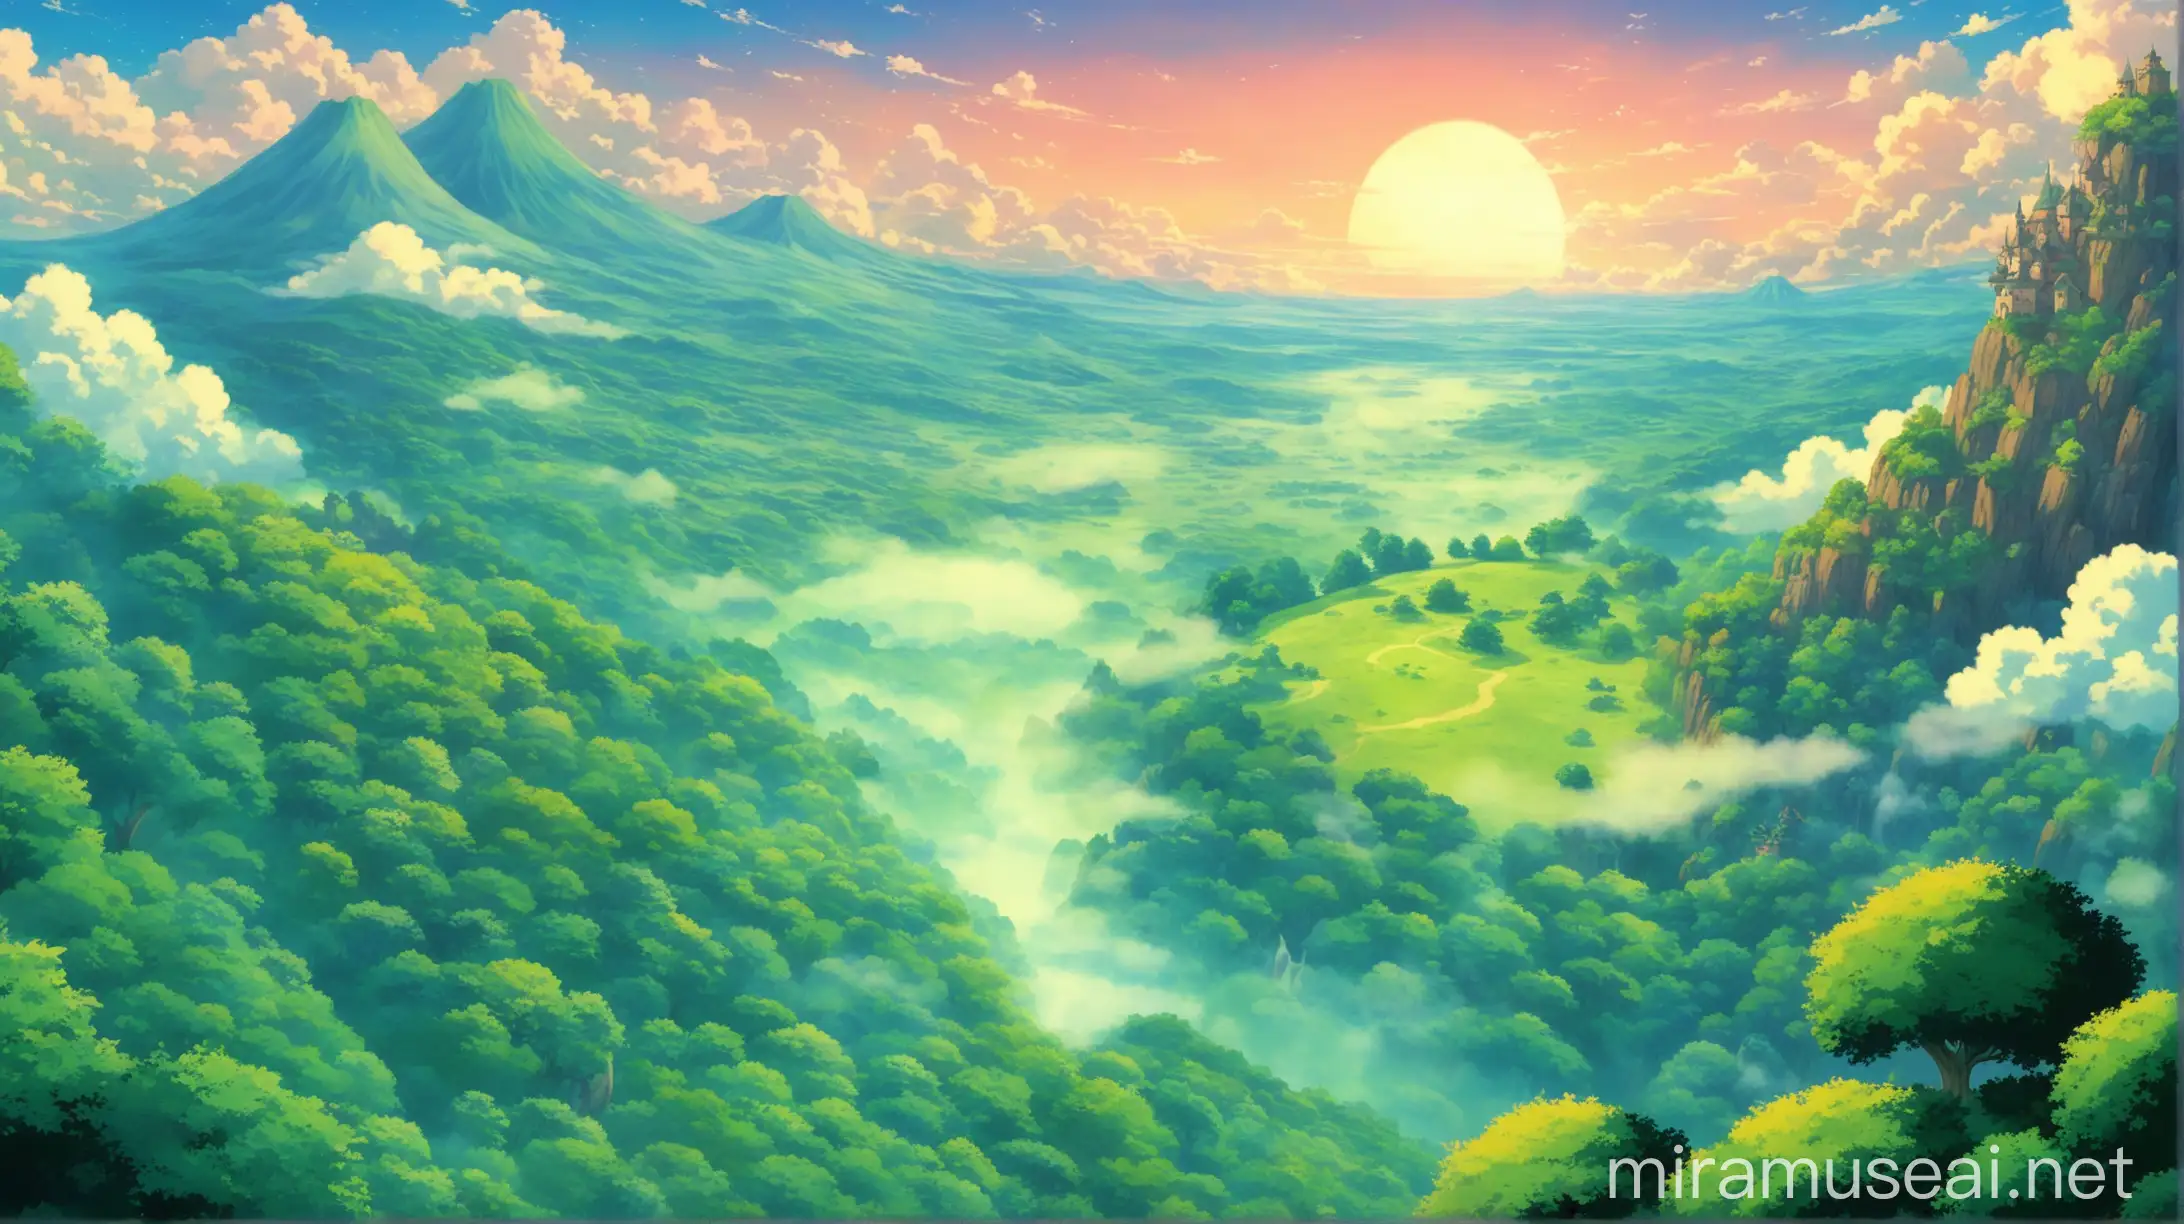 Ghibli Dreamy nature landscape wallpaper